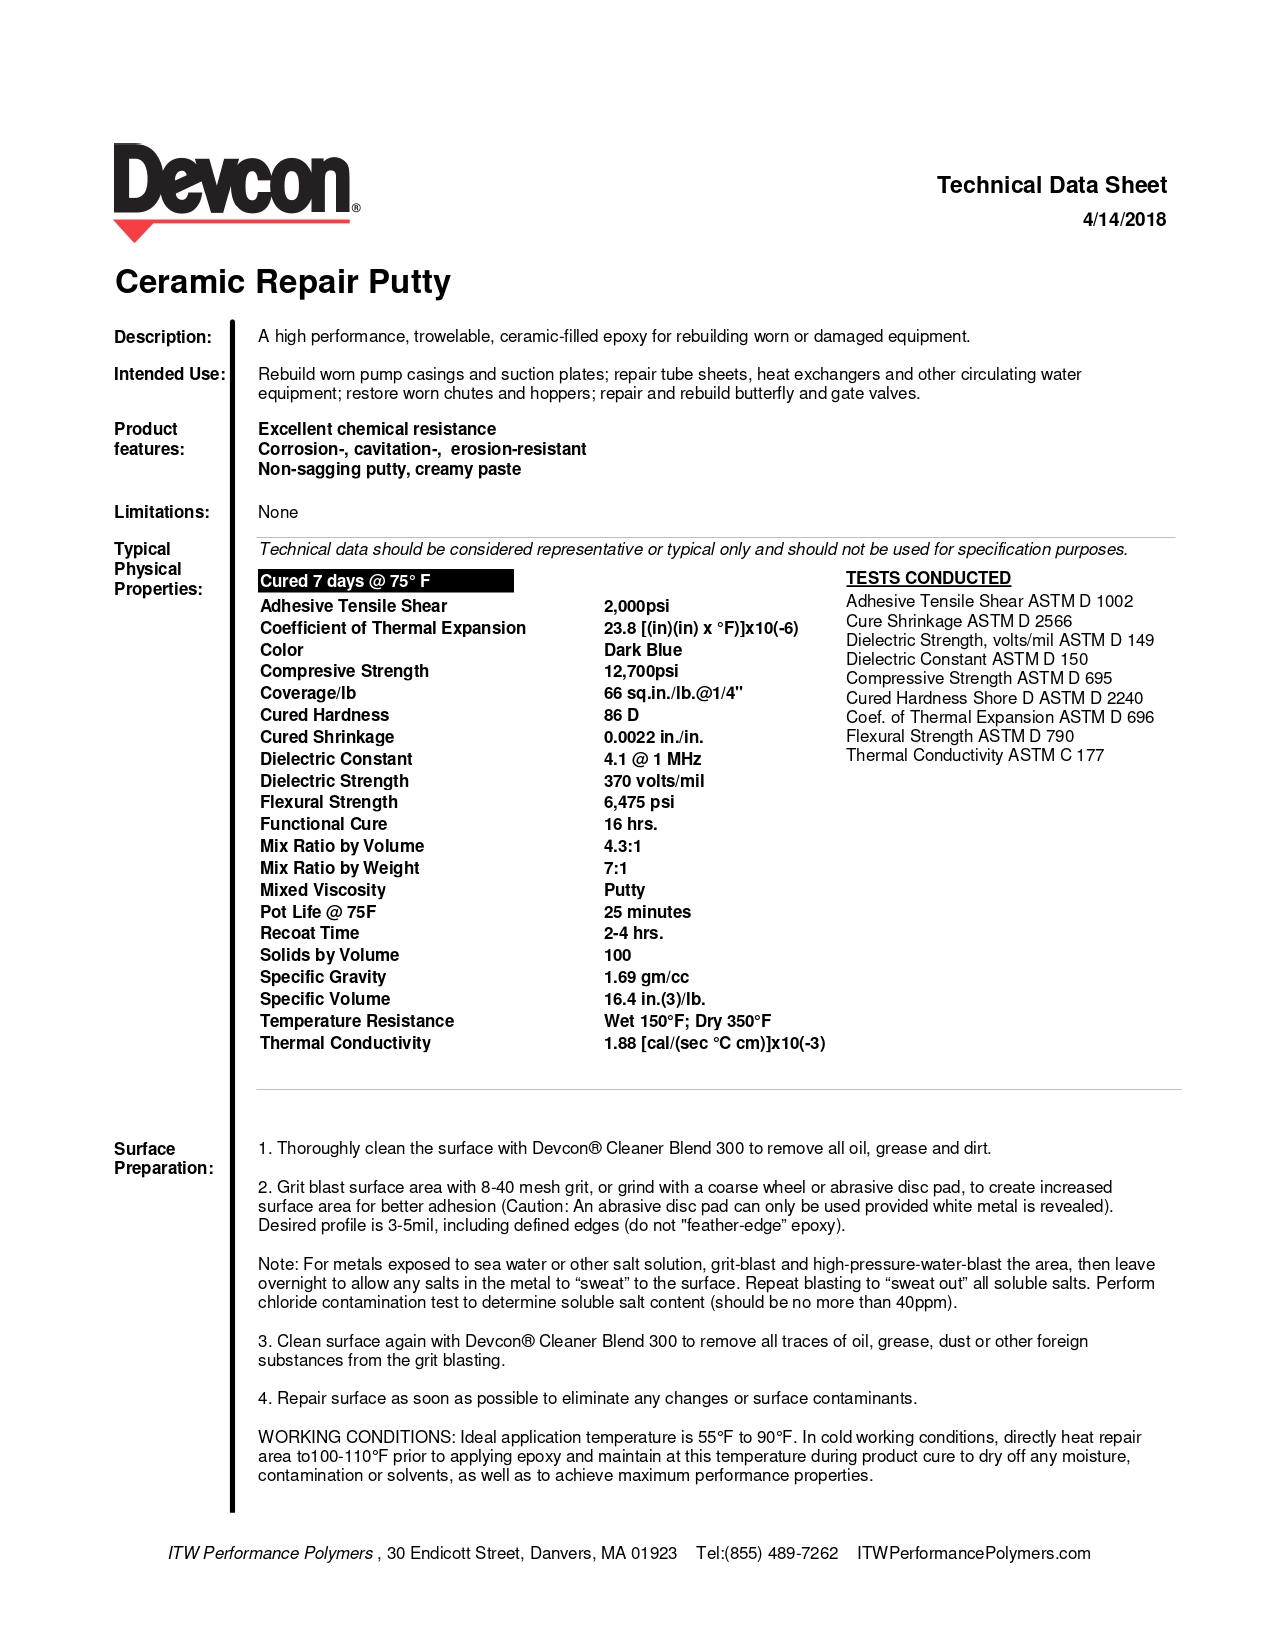 Devcon 11700 Ceramic Repair Putty Ceramic Filled Epoxy 3 lb kit